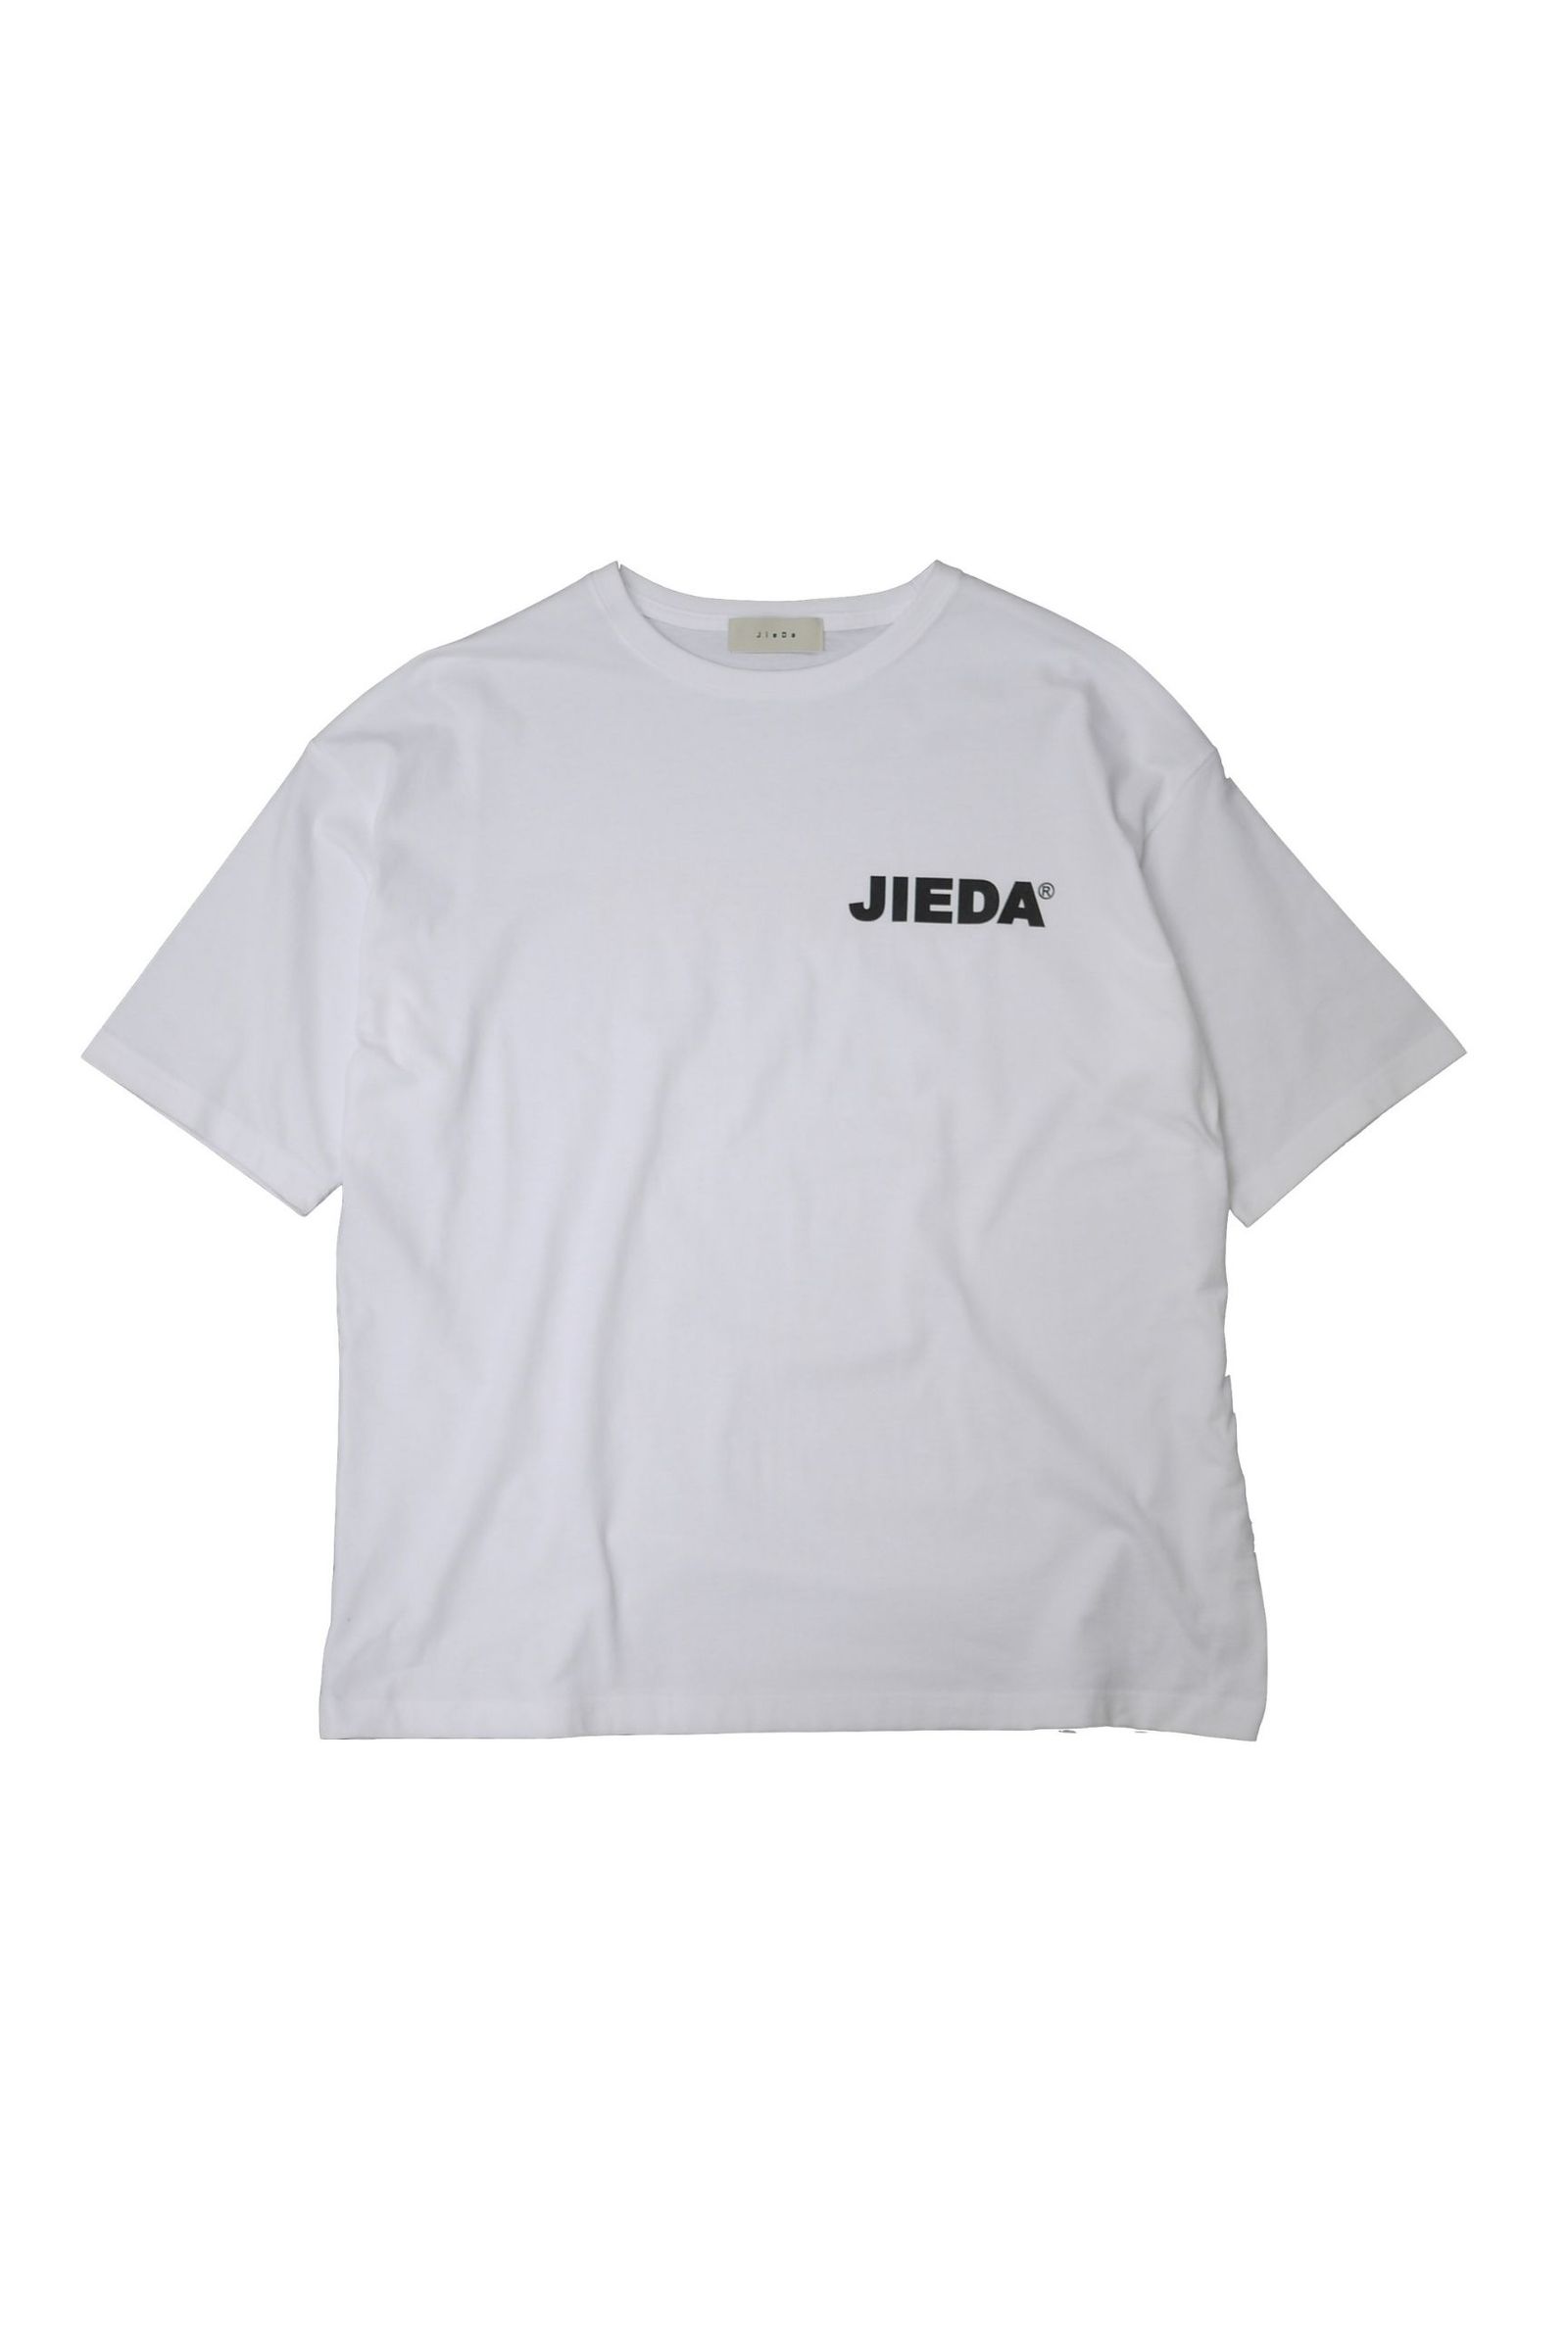 JieDa - JIEDA LOGO TEE/カットソー | NapsNote